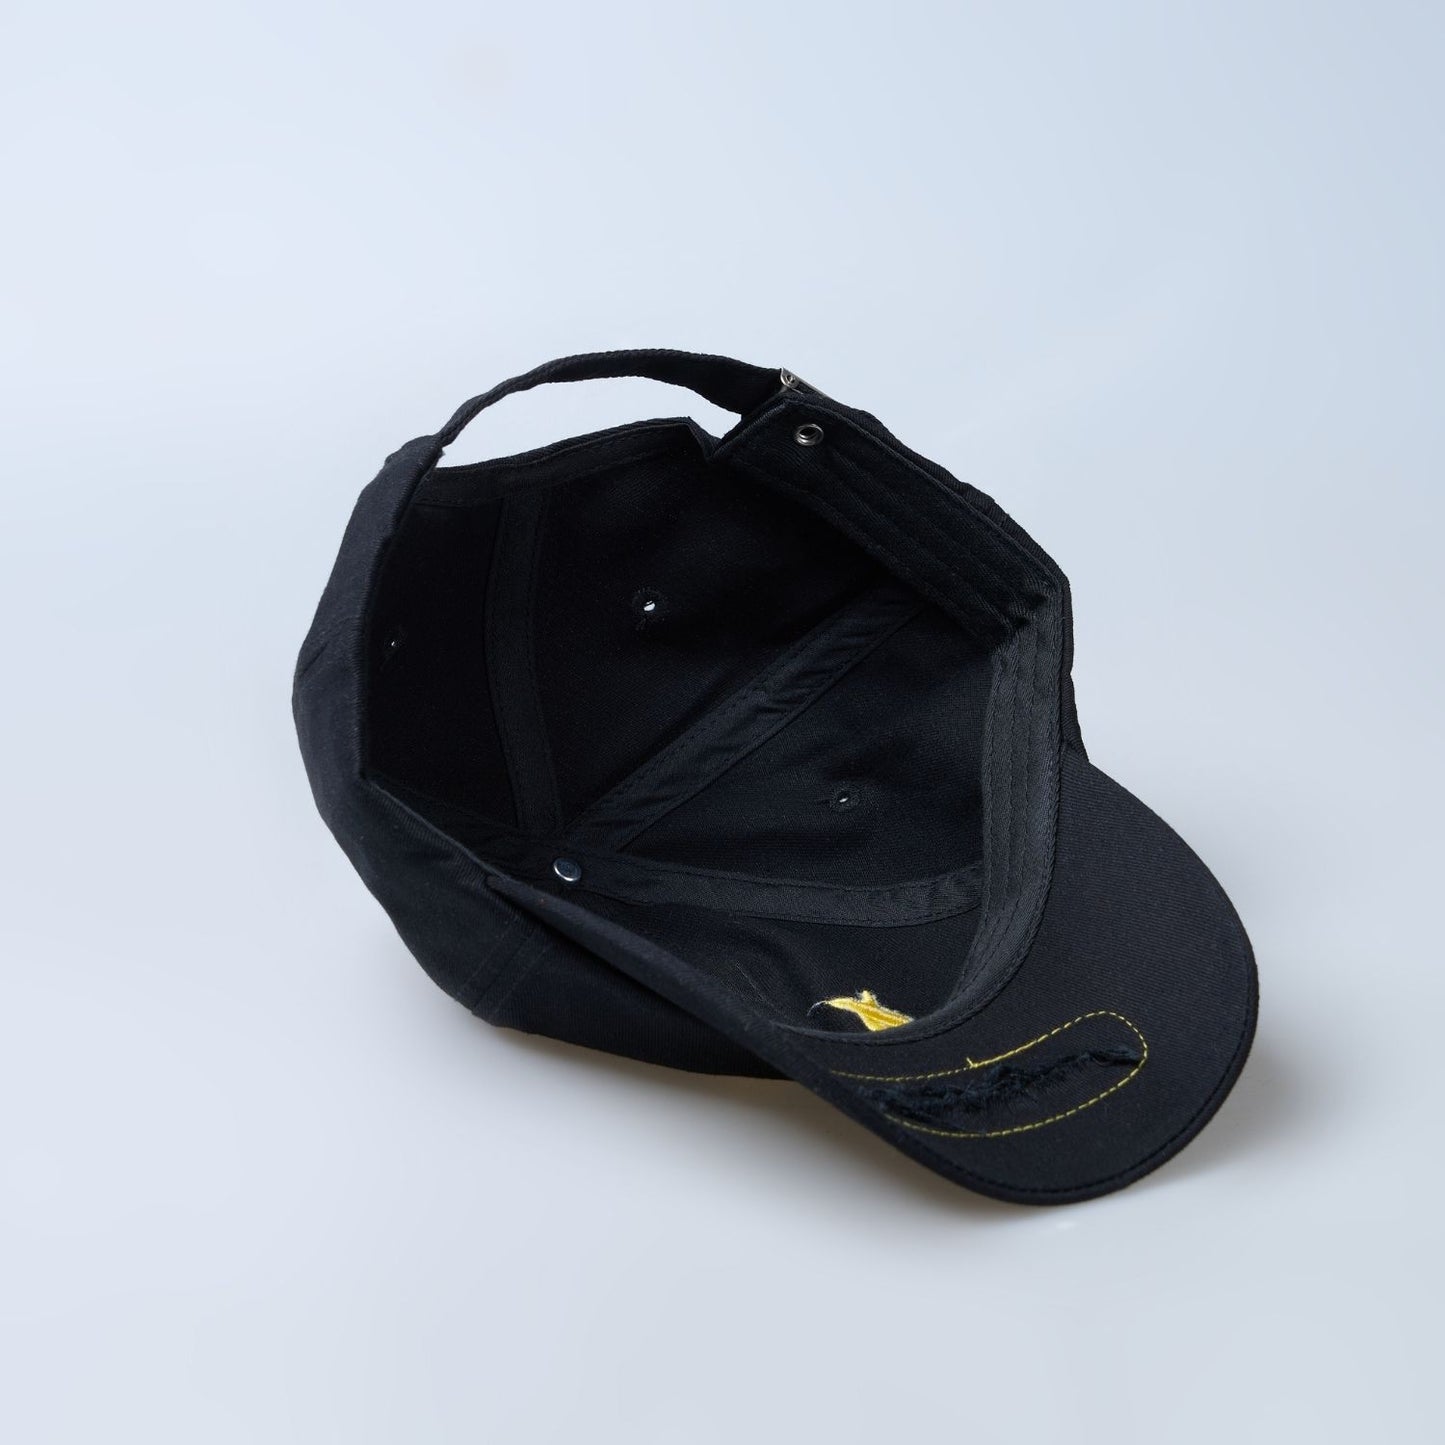 Black colored solid basic cap for men upside down.